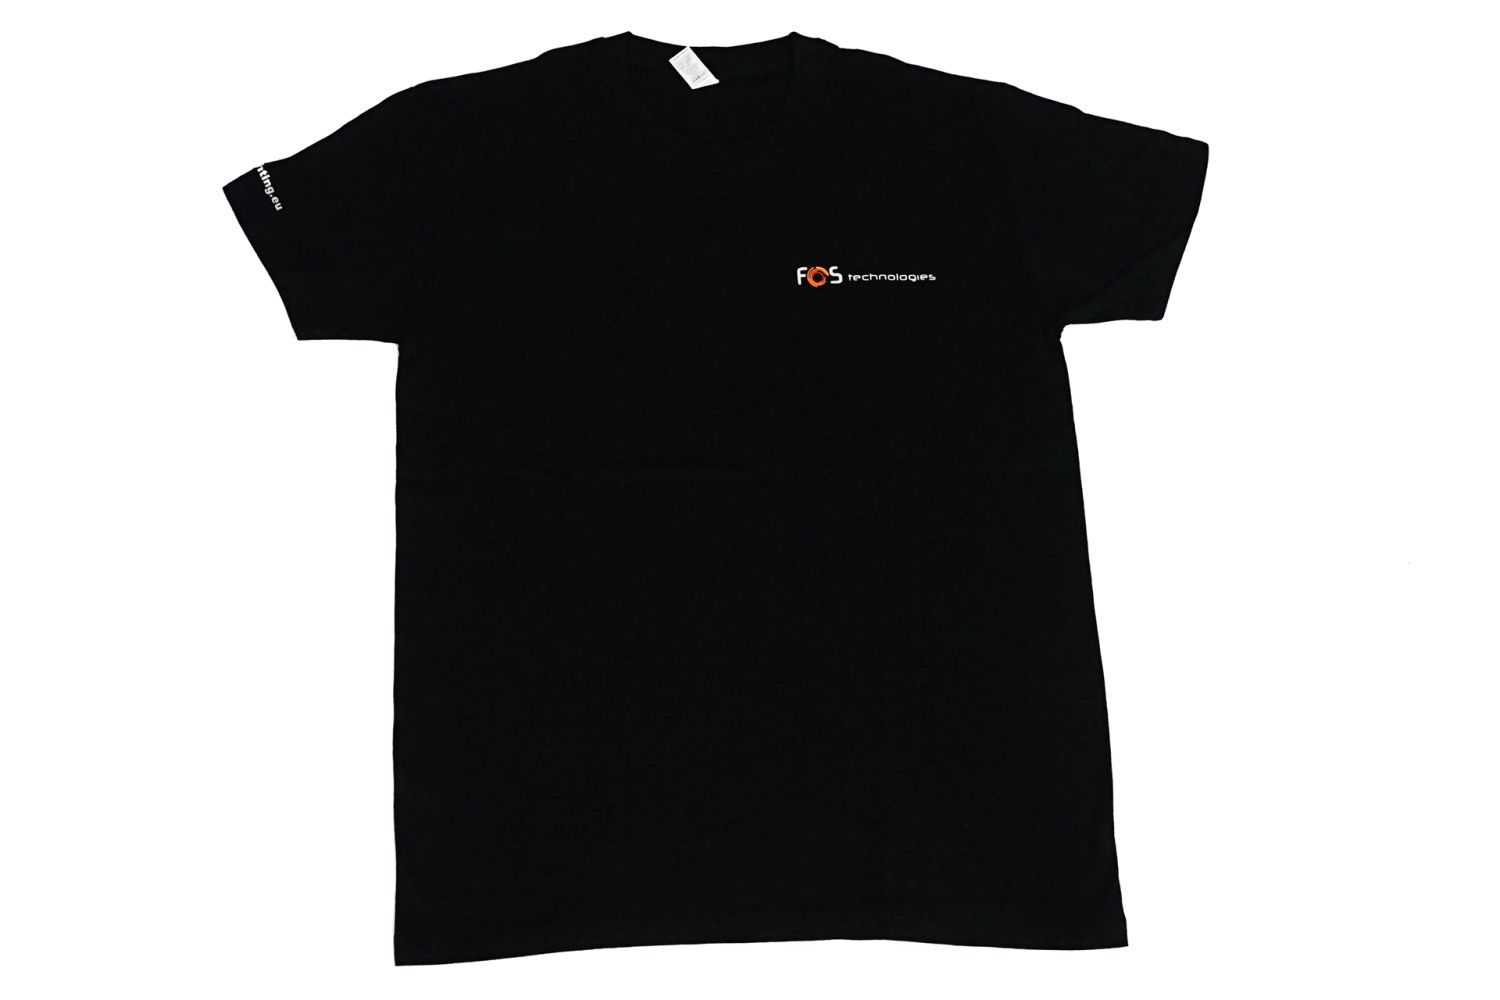 FOS T Shirt Black XL - Koszulka FOS